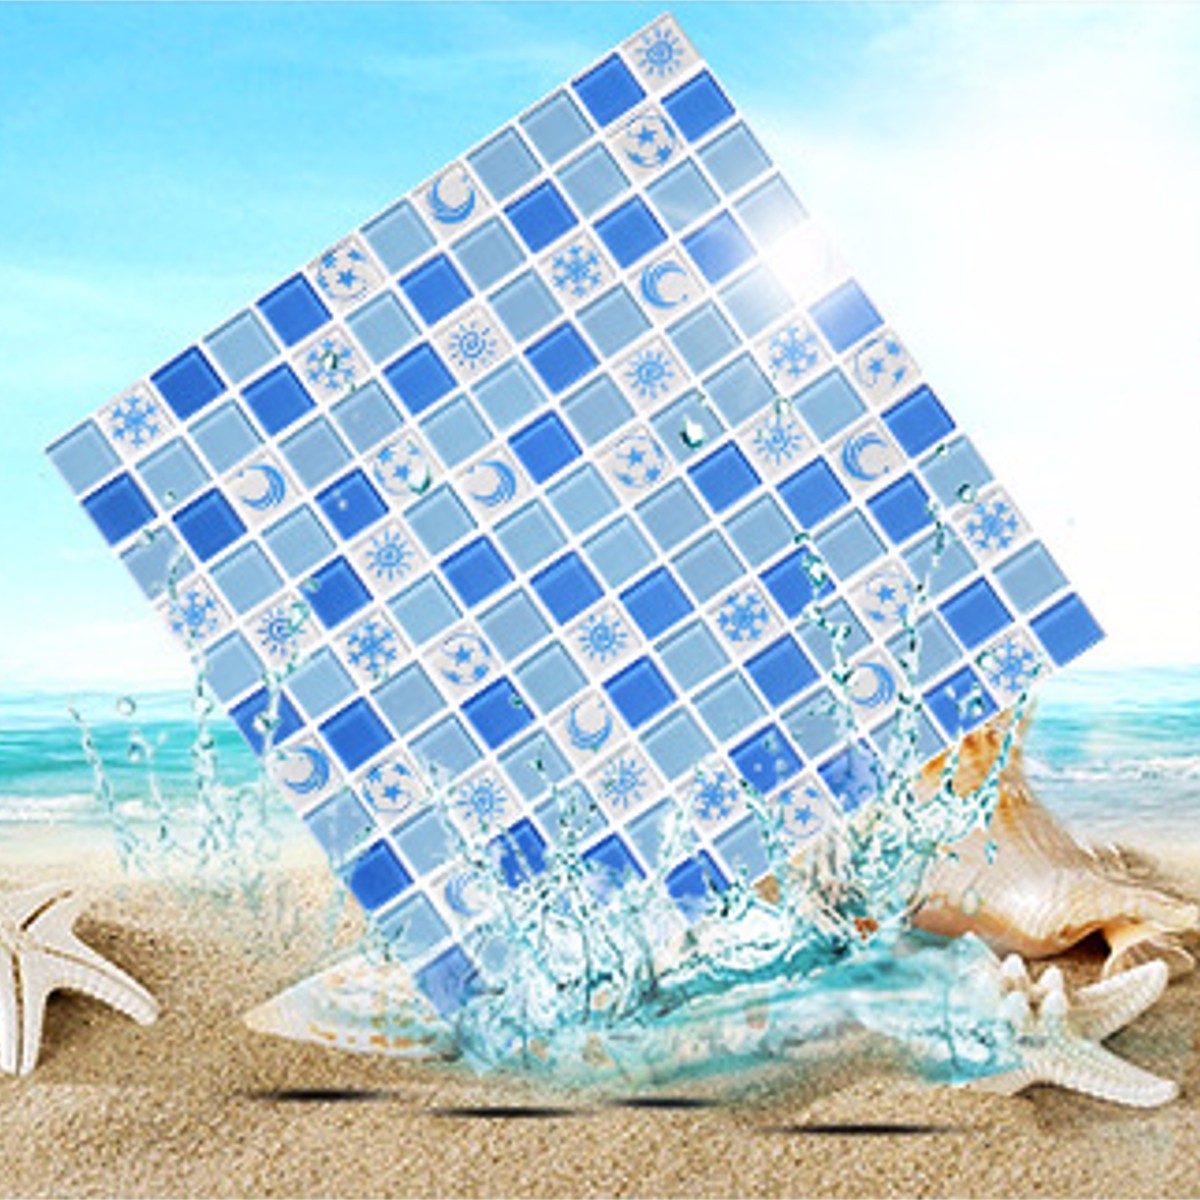 Waterproof-Crystal-3D-Mosaic-Tiles-Wall-Sticker-for-Bathroom-Decor-1121518